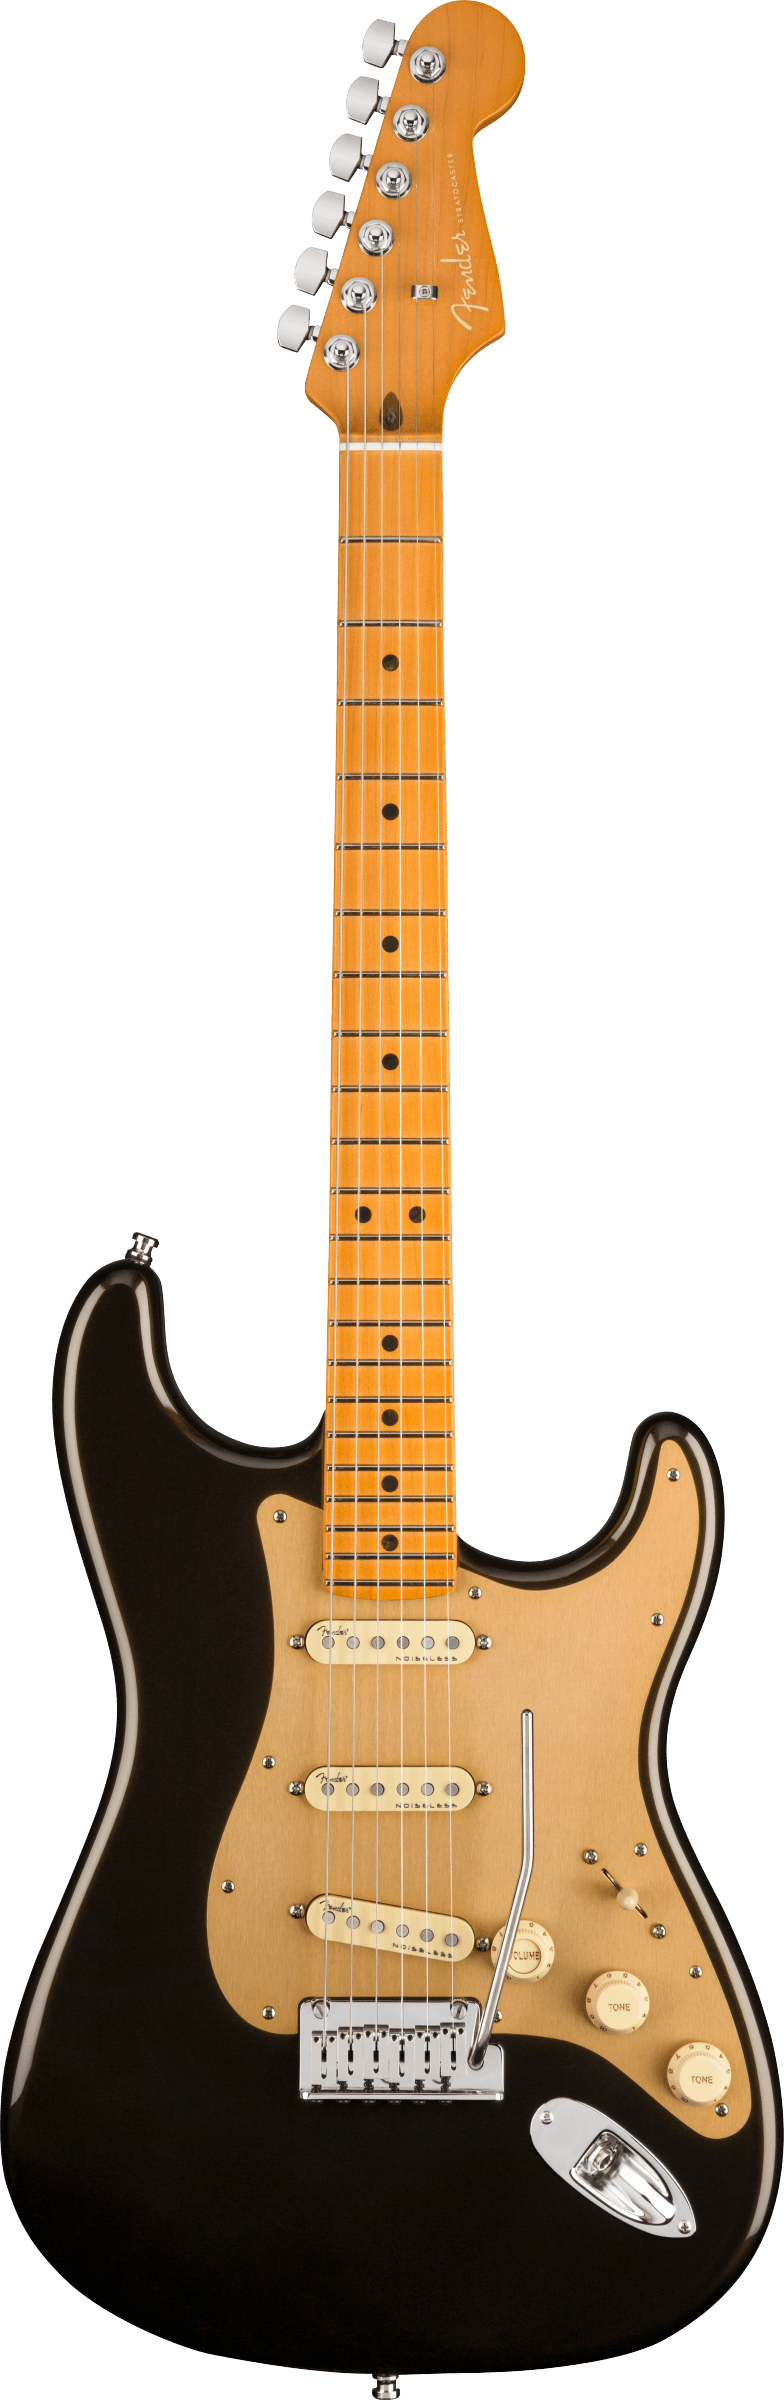 Fender Stratocaster MP electric guitar in black Texas Tea color Tone Shop Guitars Dallas